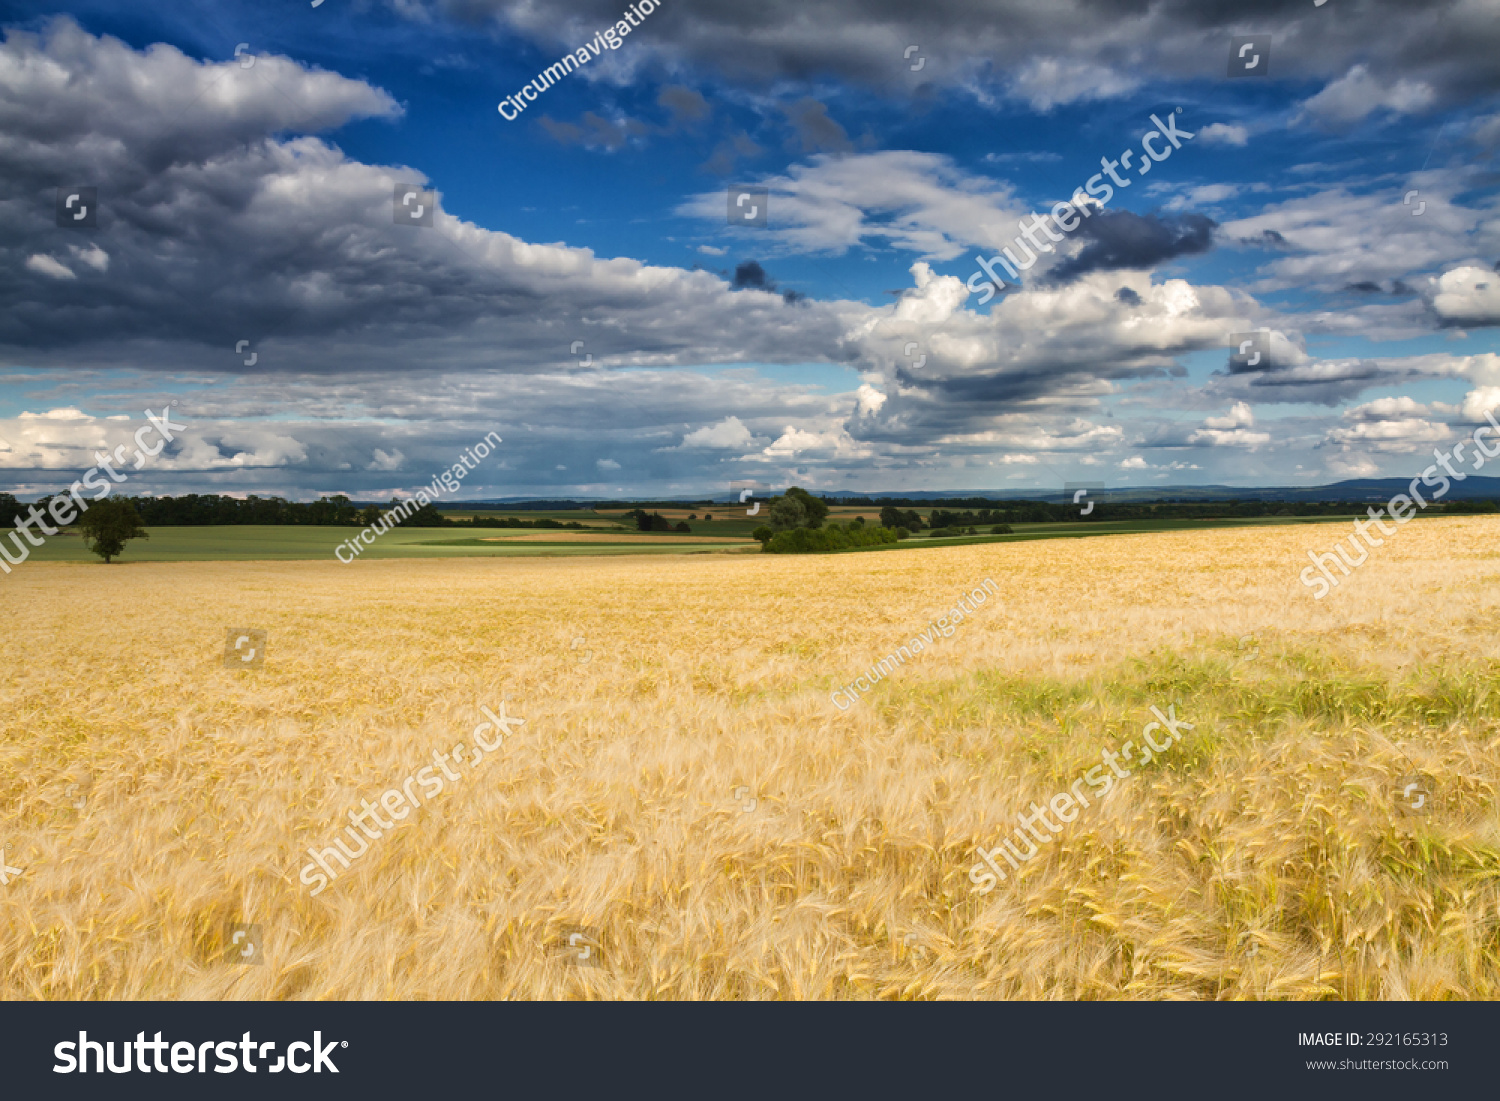 Golden wheat field under a partly cloudy sky, Wetterau, Hessen, Germany #292165313